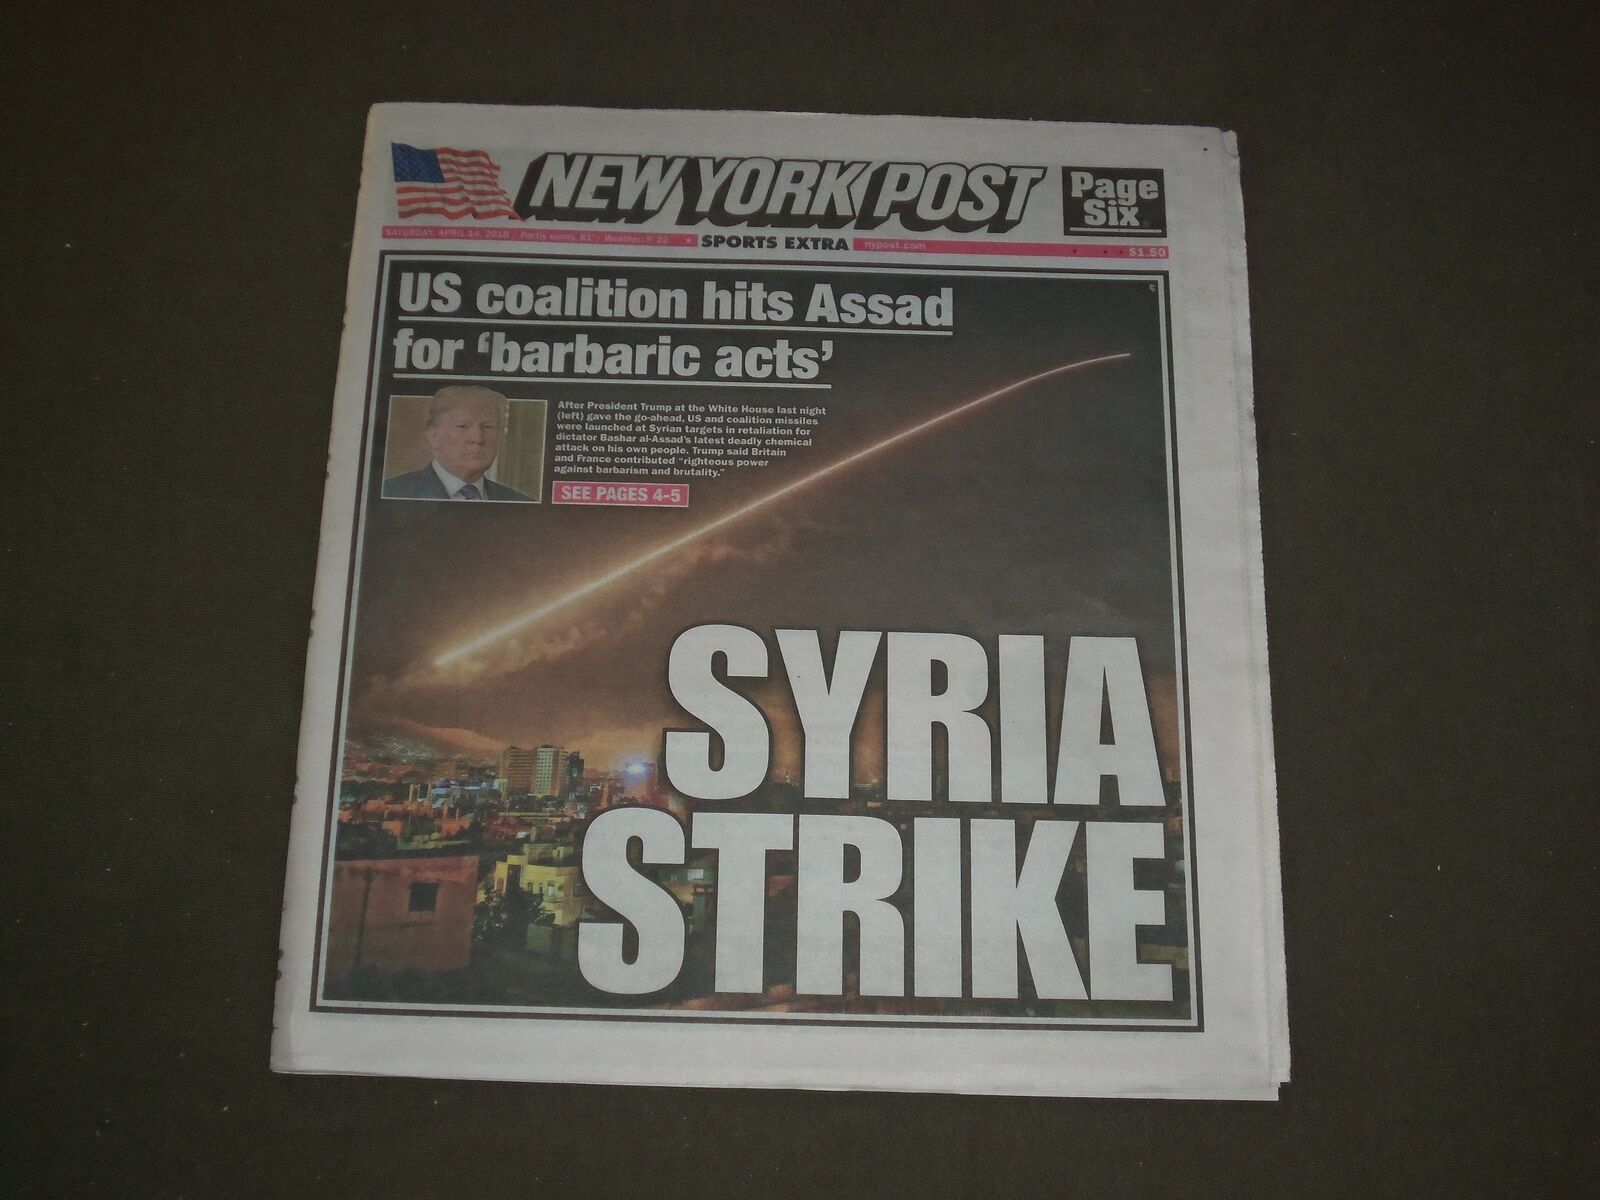 2018 APRIL 14 NEW YORK POST NEWSPAPER - SPORTS EXTRA EDITION - SYRIA STRIKE